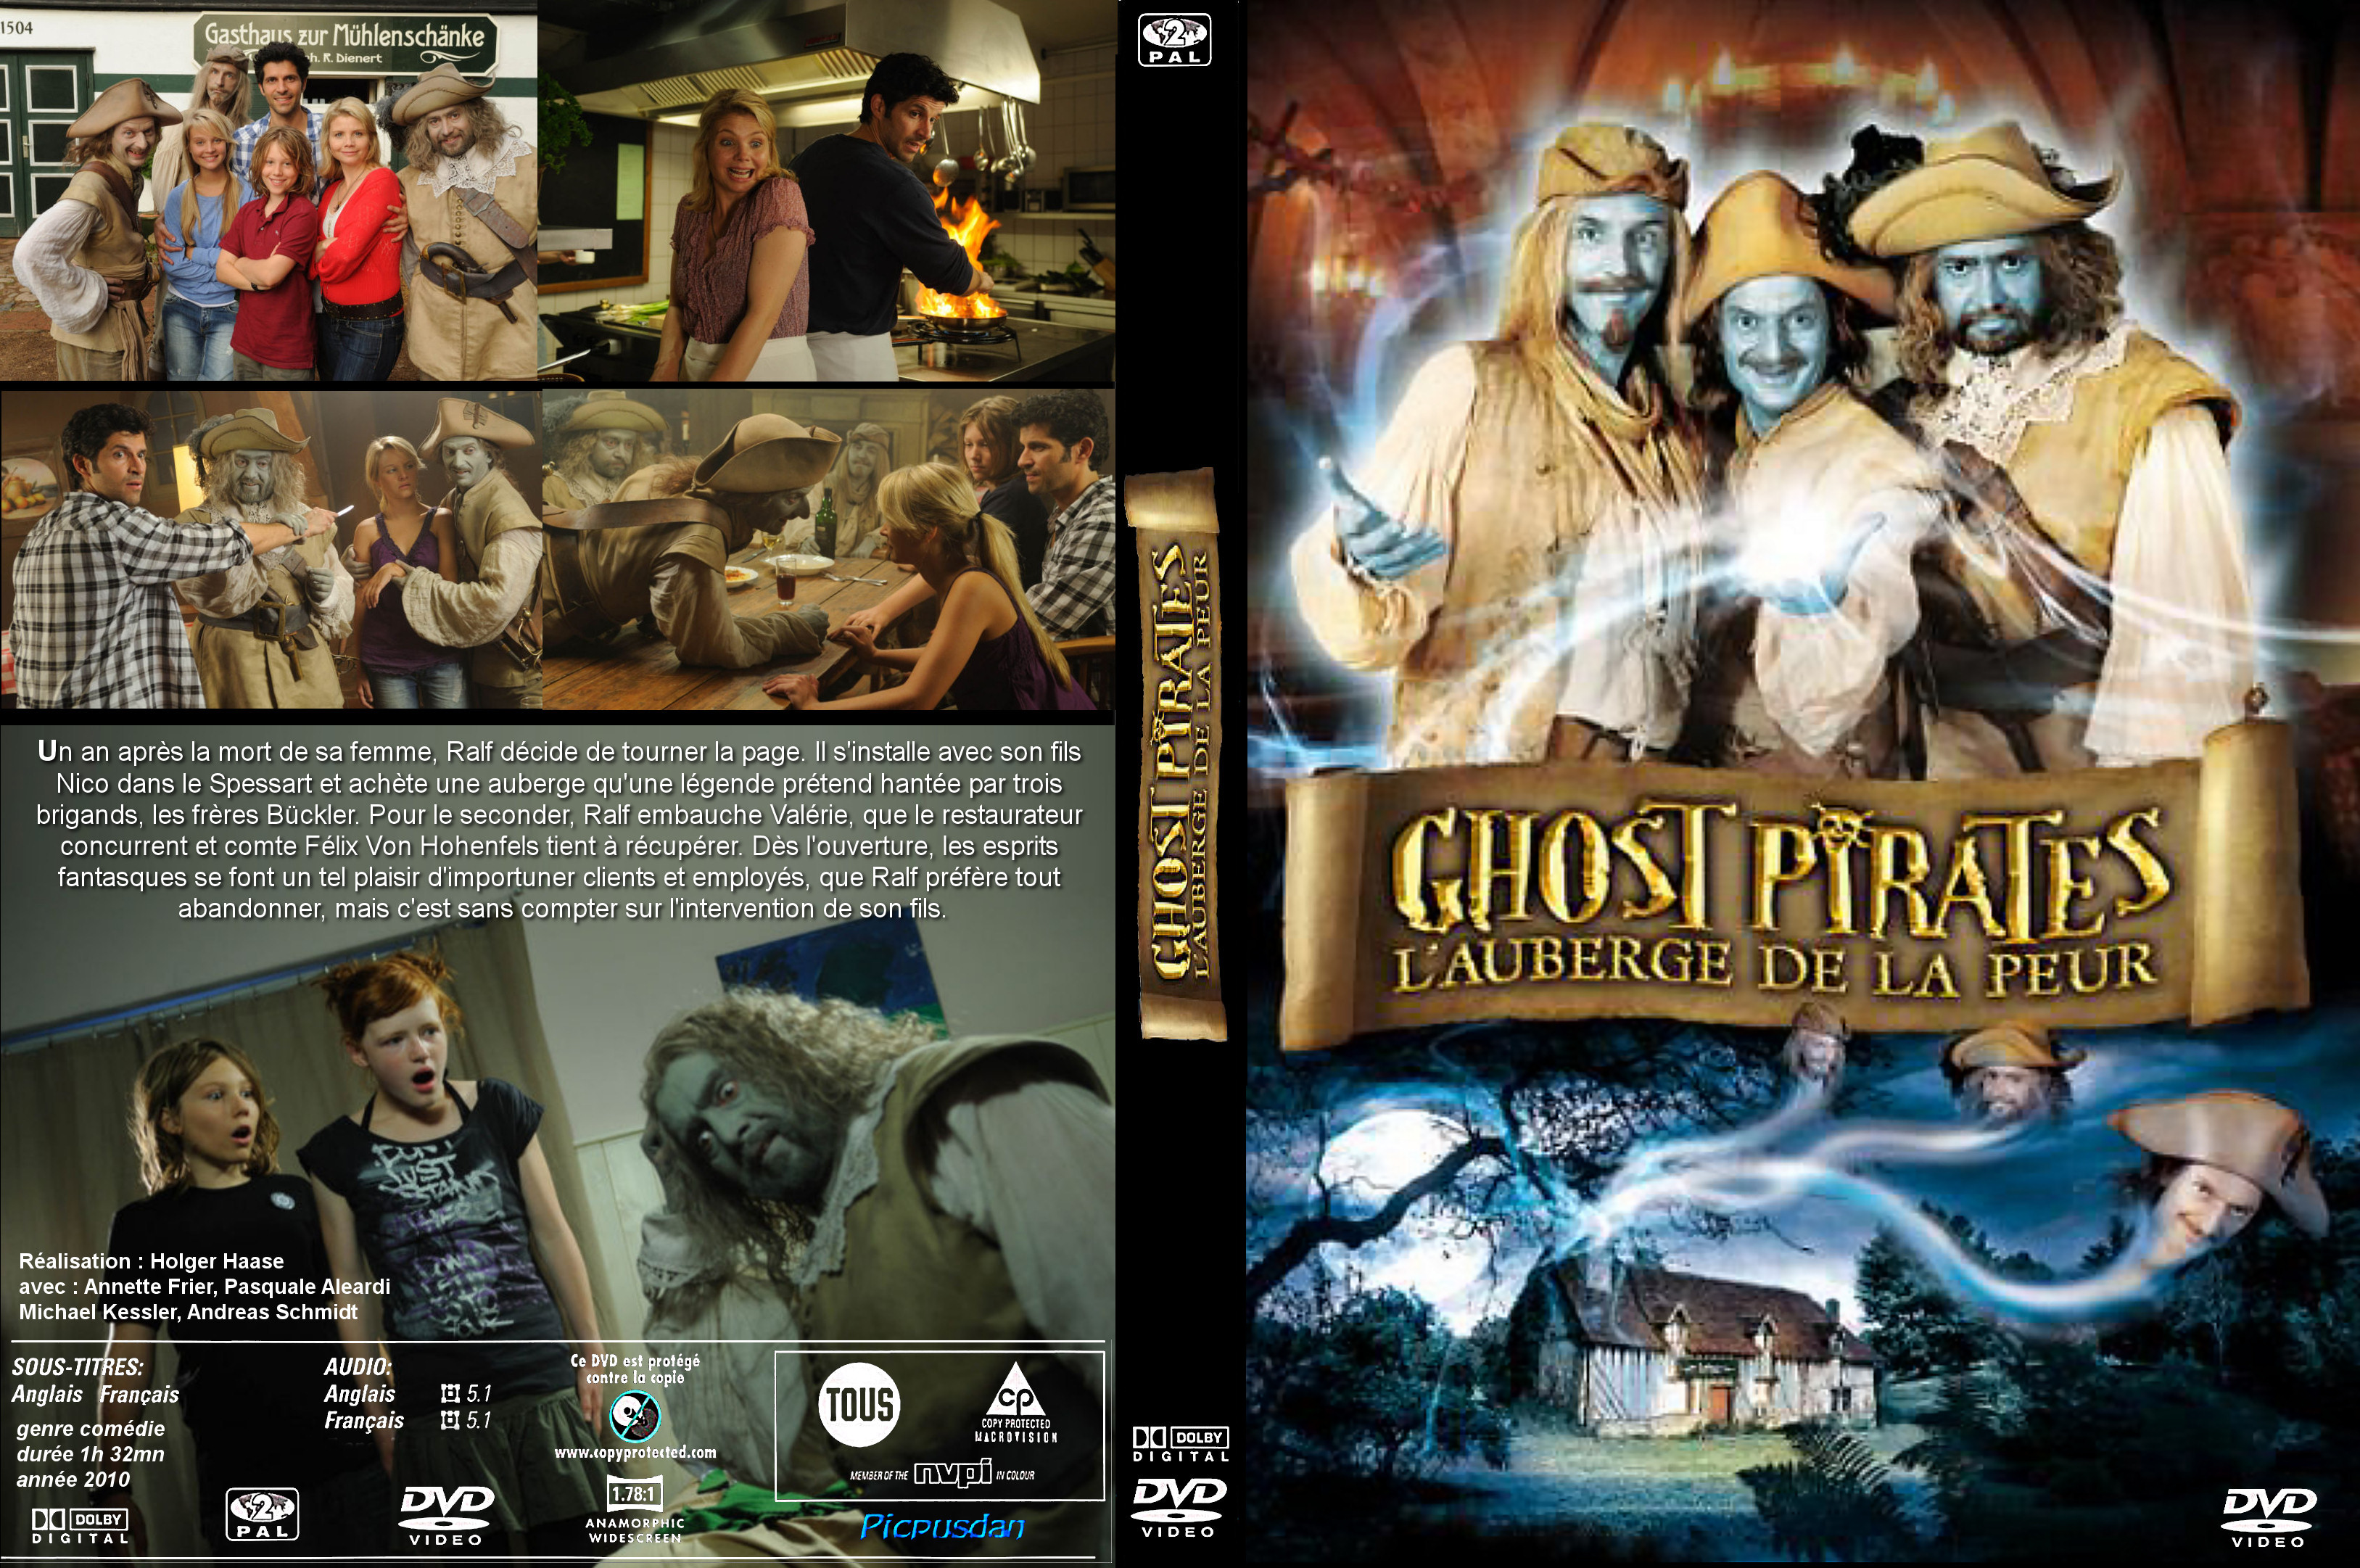 Jaquette DVD Ghost pirates l